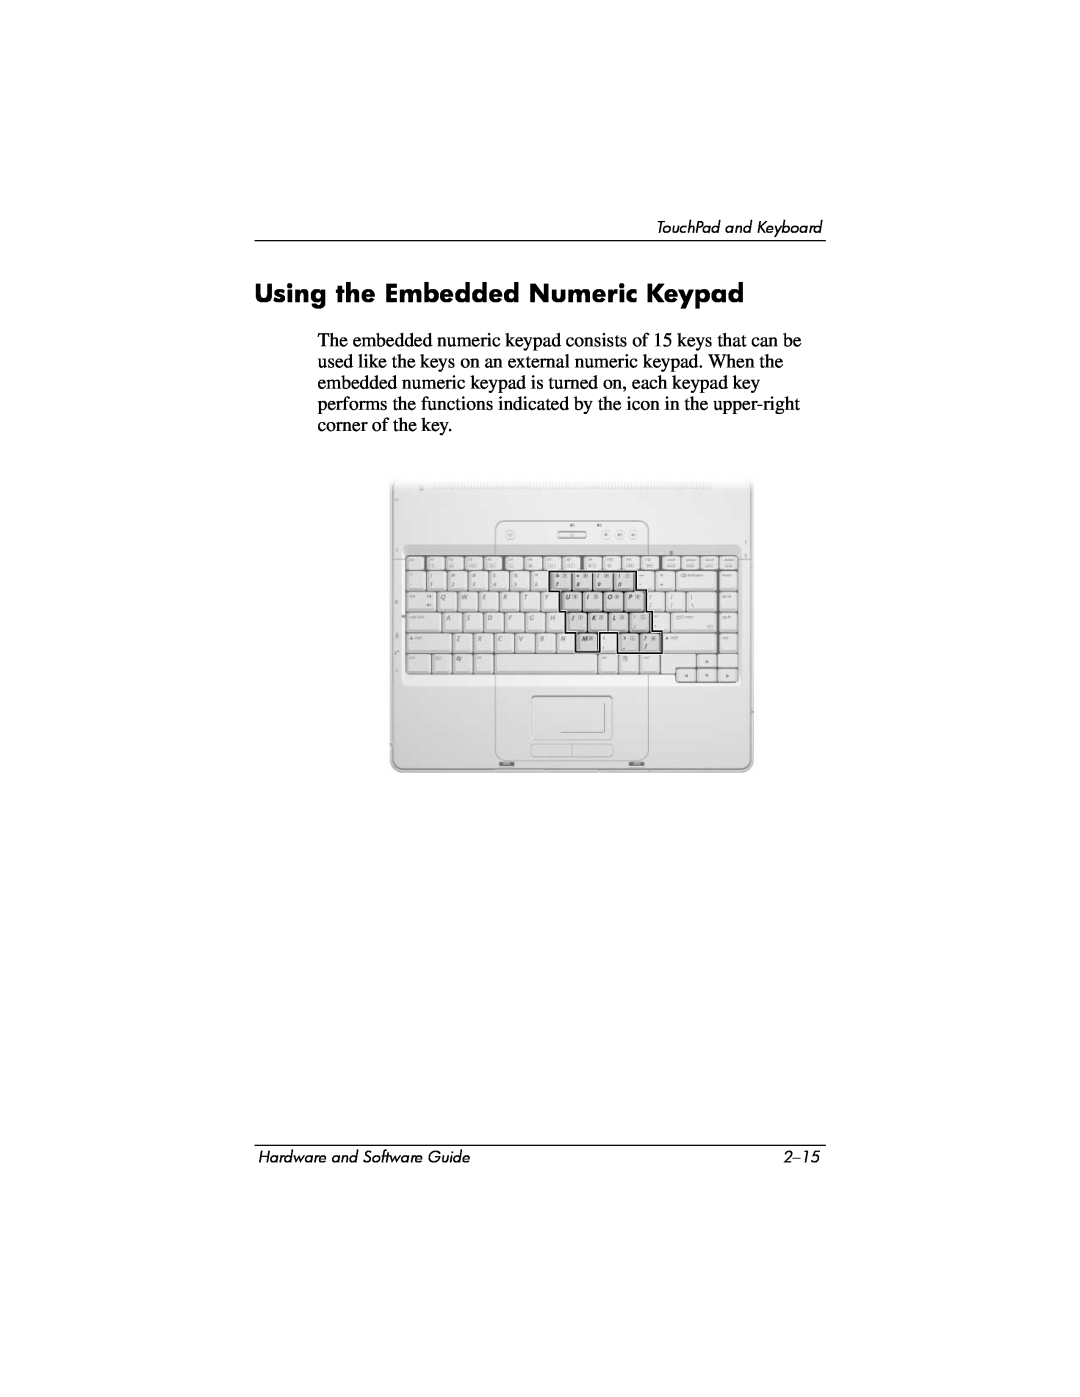 Compaq Presario M2000 manual Using the Embedded Numeric Keypad 